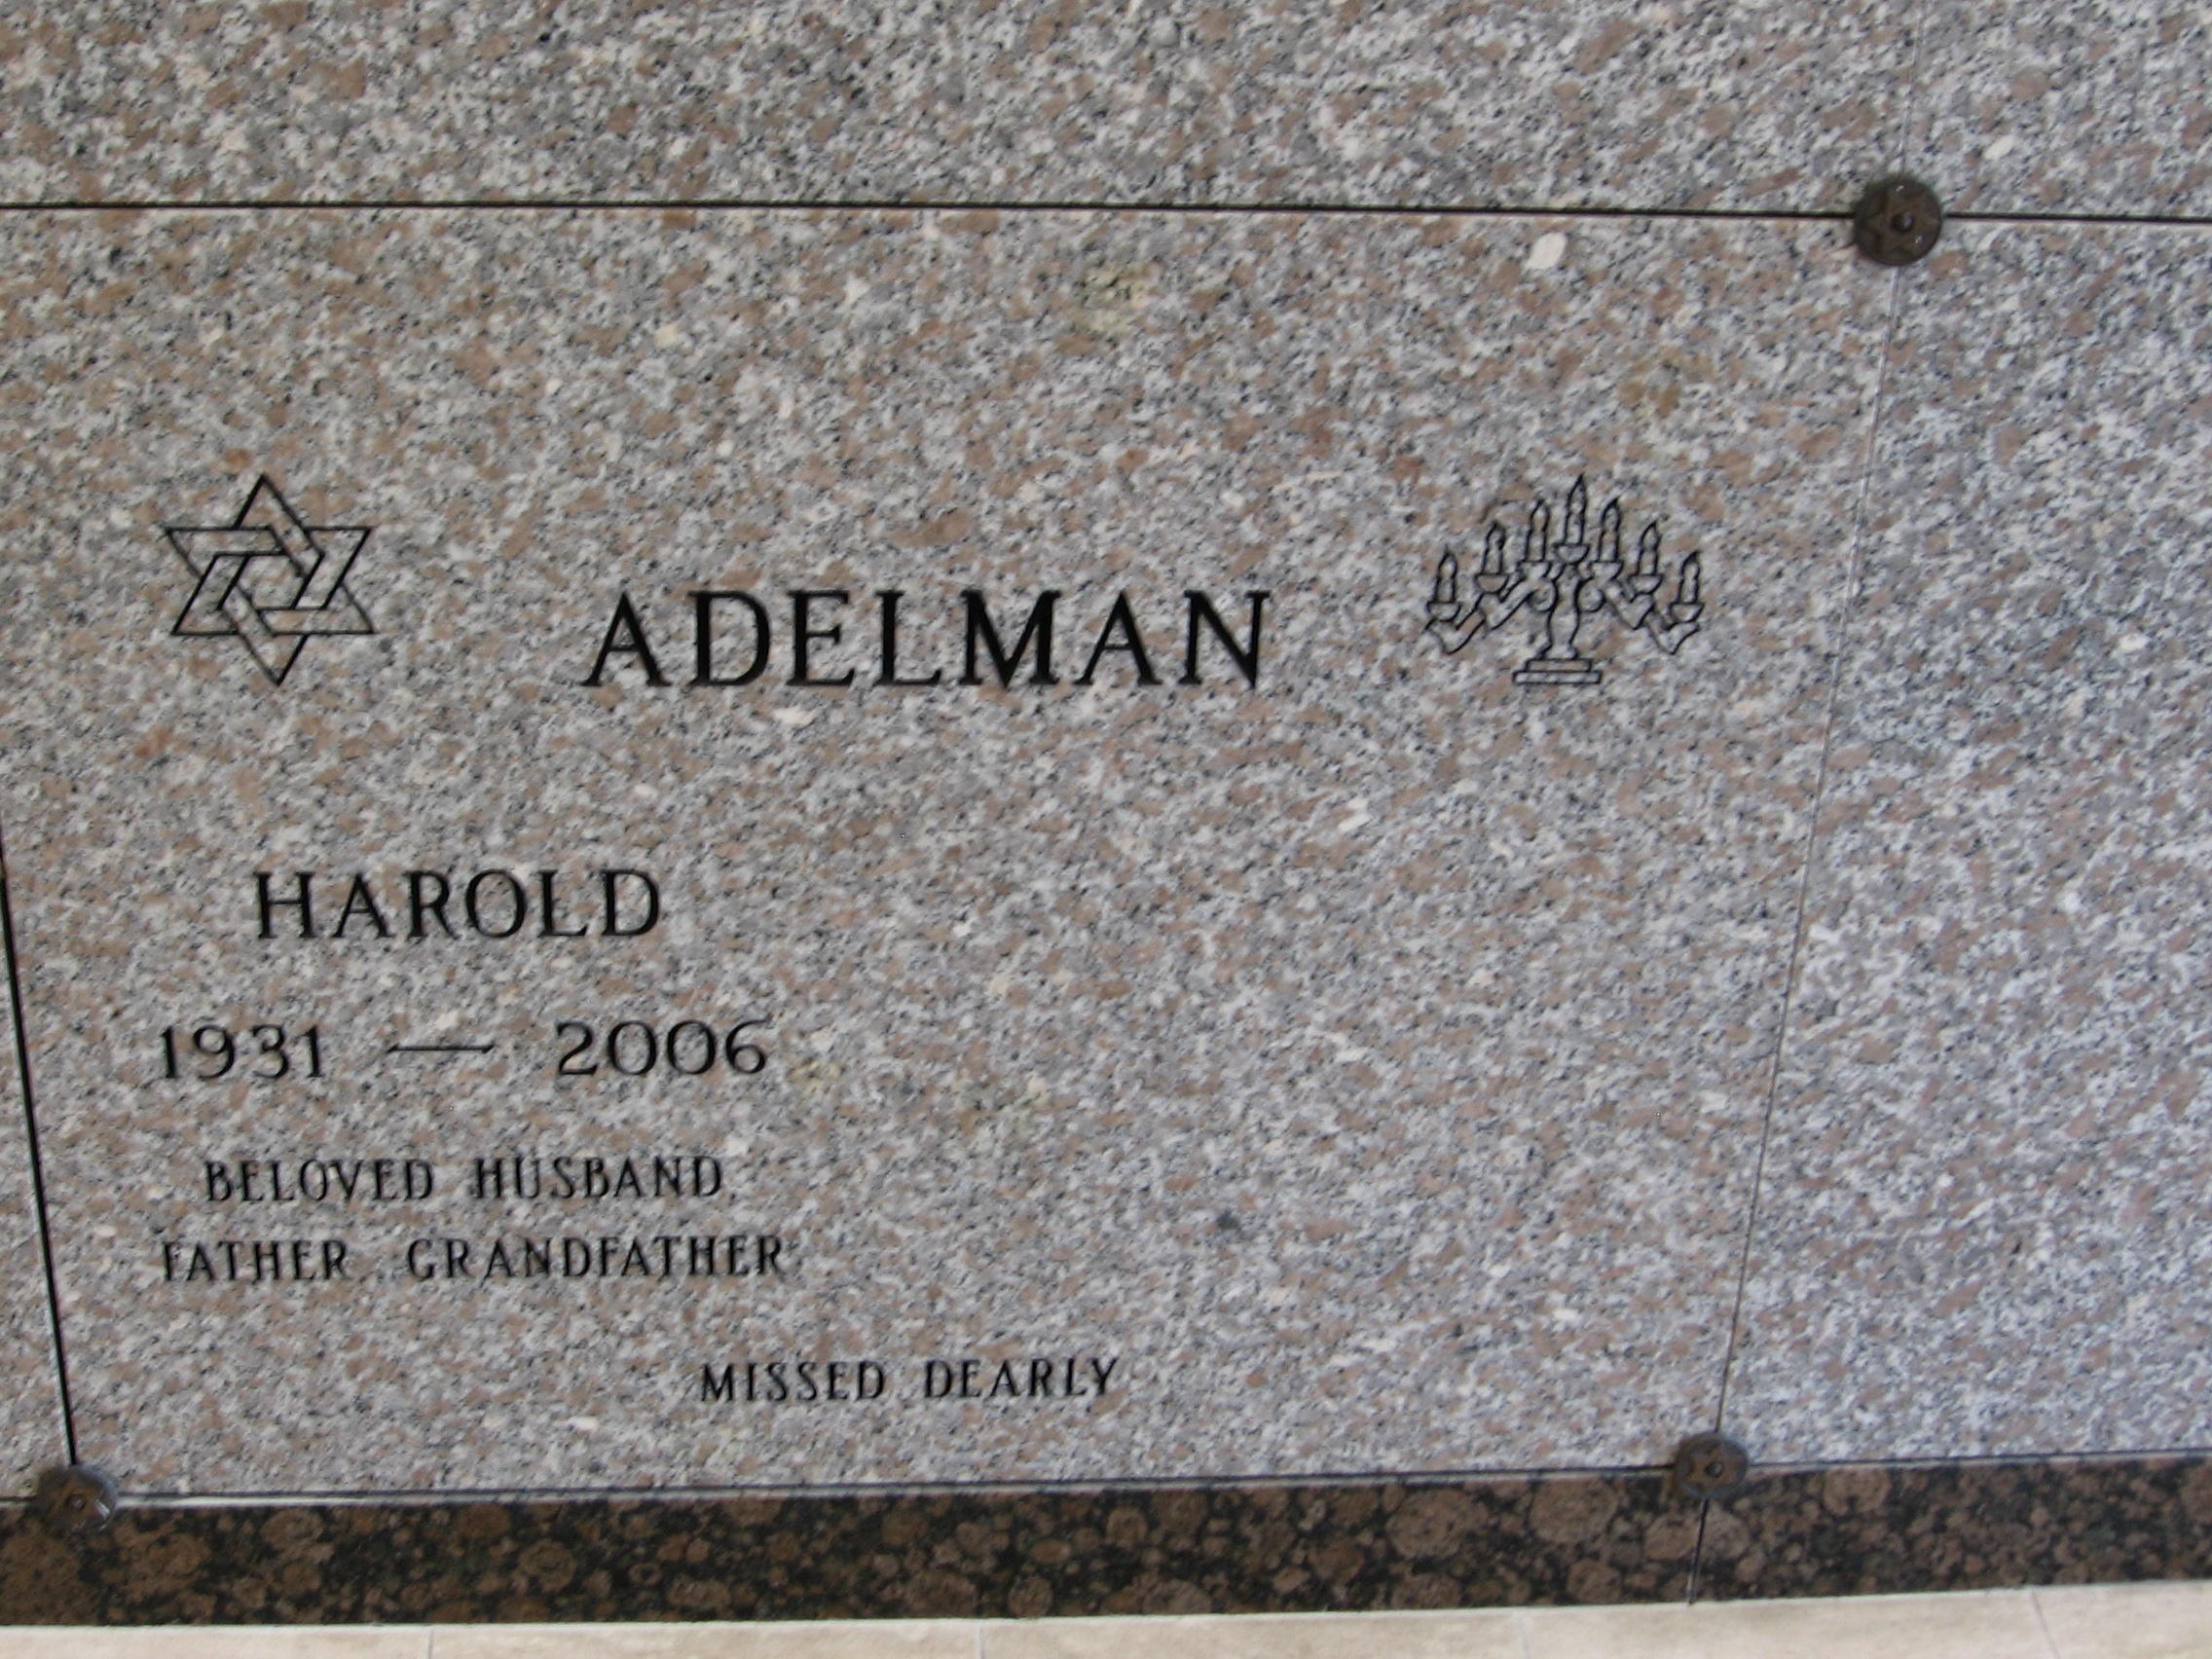 Harold Adelman